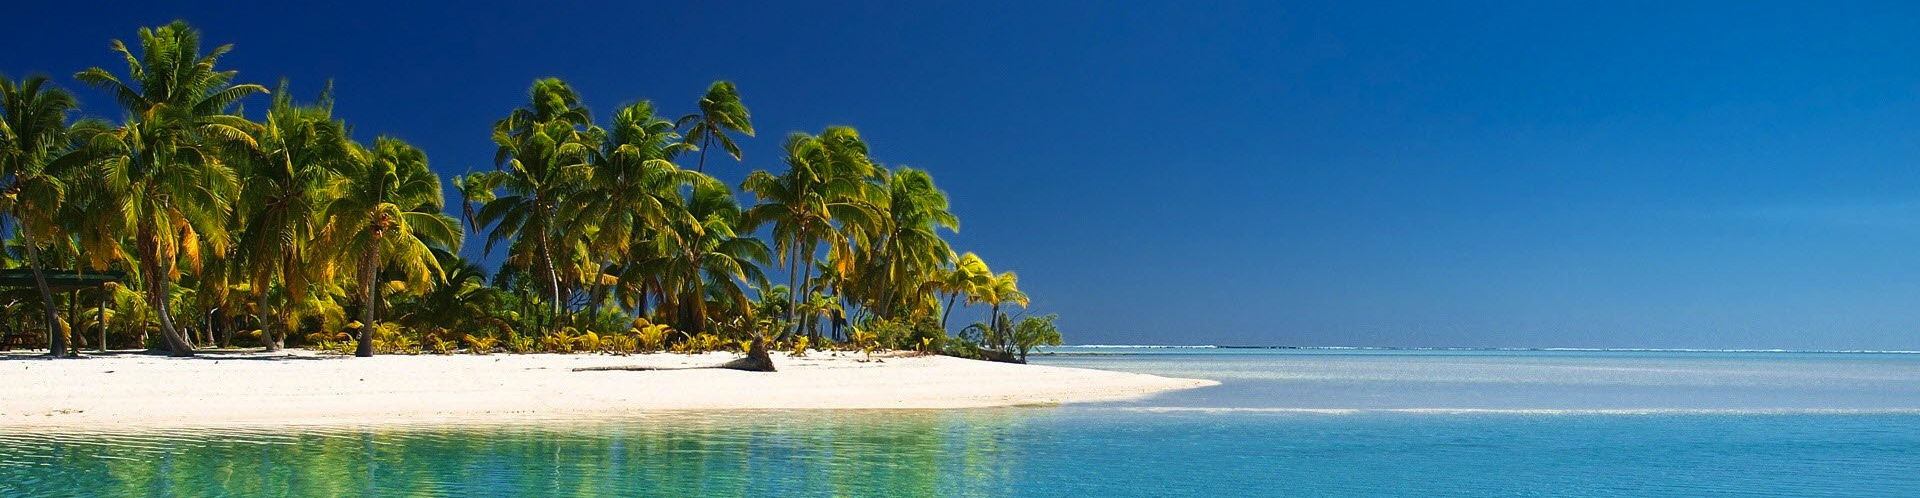 Beach Landscape Wallpaper Tropical Island Memes